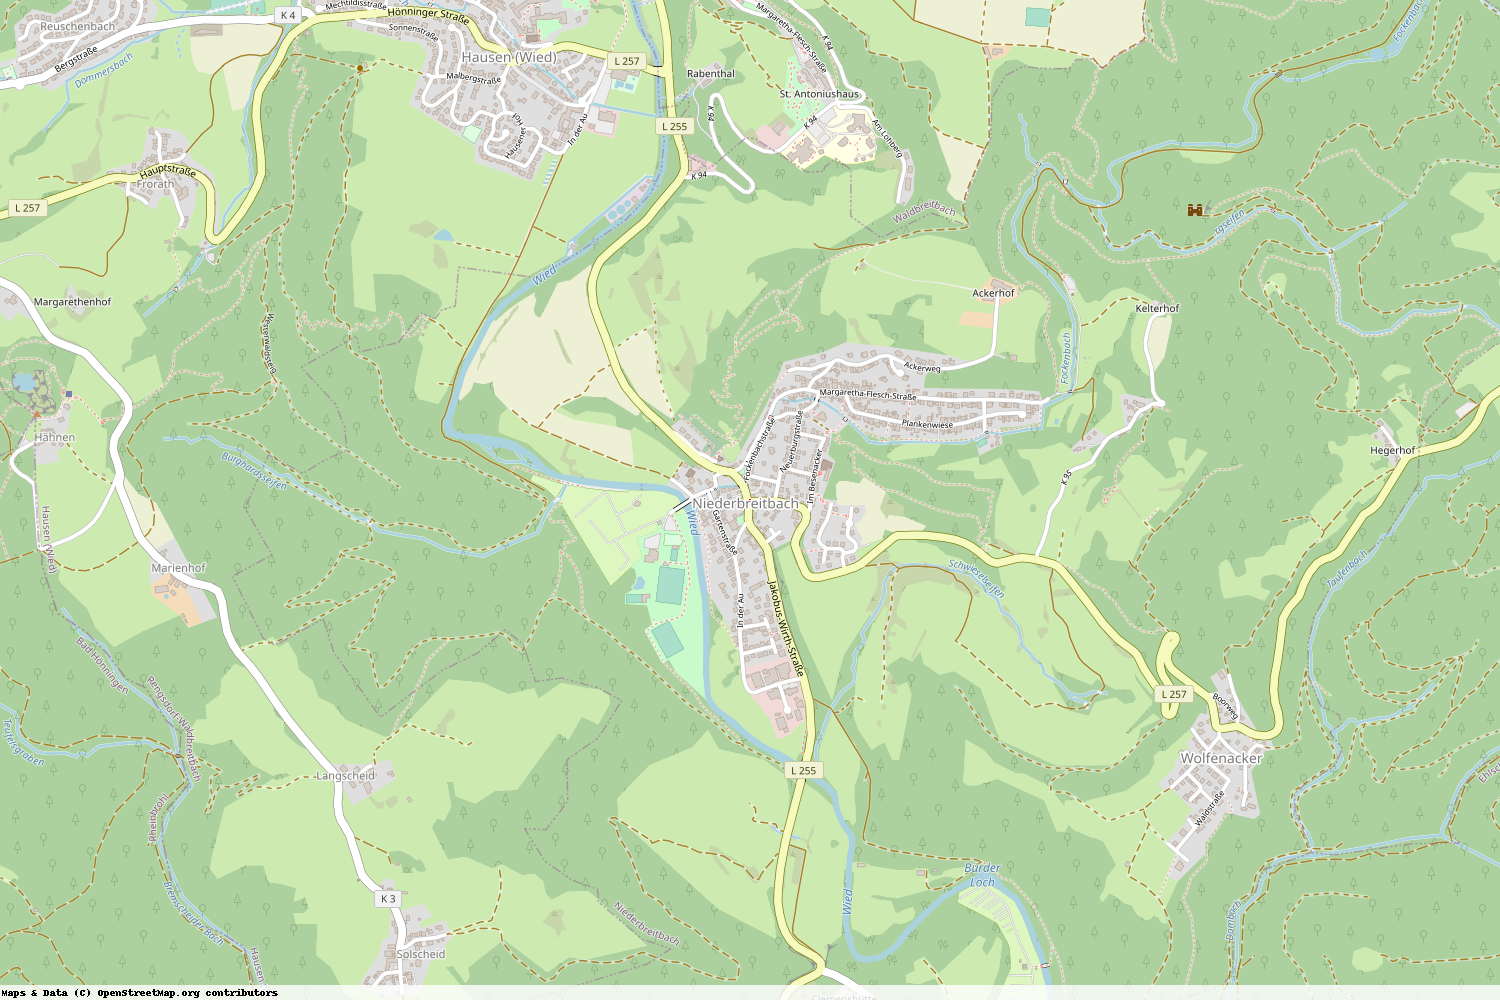 Ist gerade Stromausfall in Rheinland-Pfalz - Neuwied - Niederbreitbach?